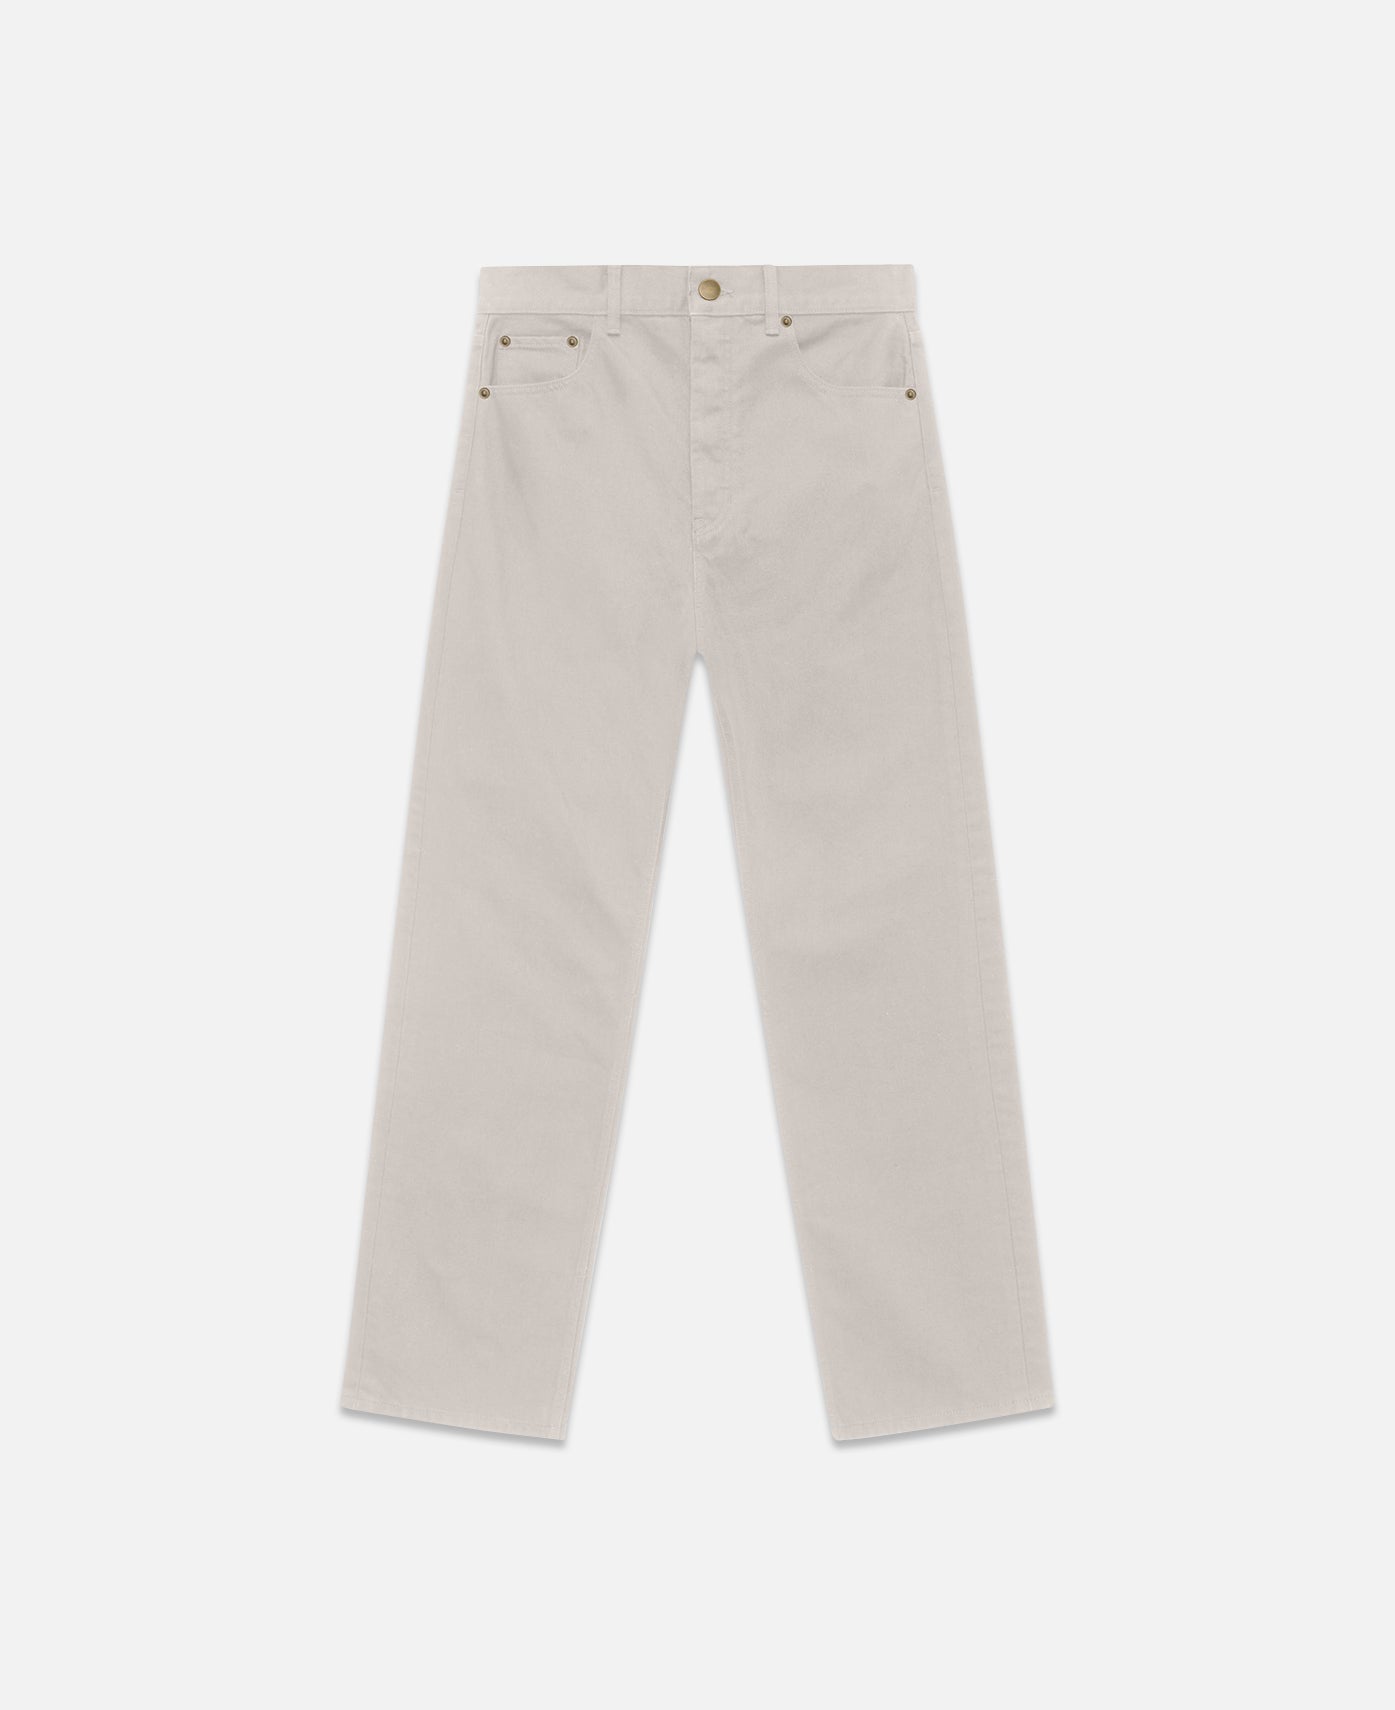 5 Pocket Jean (Grey)